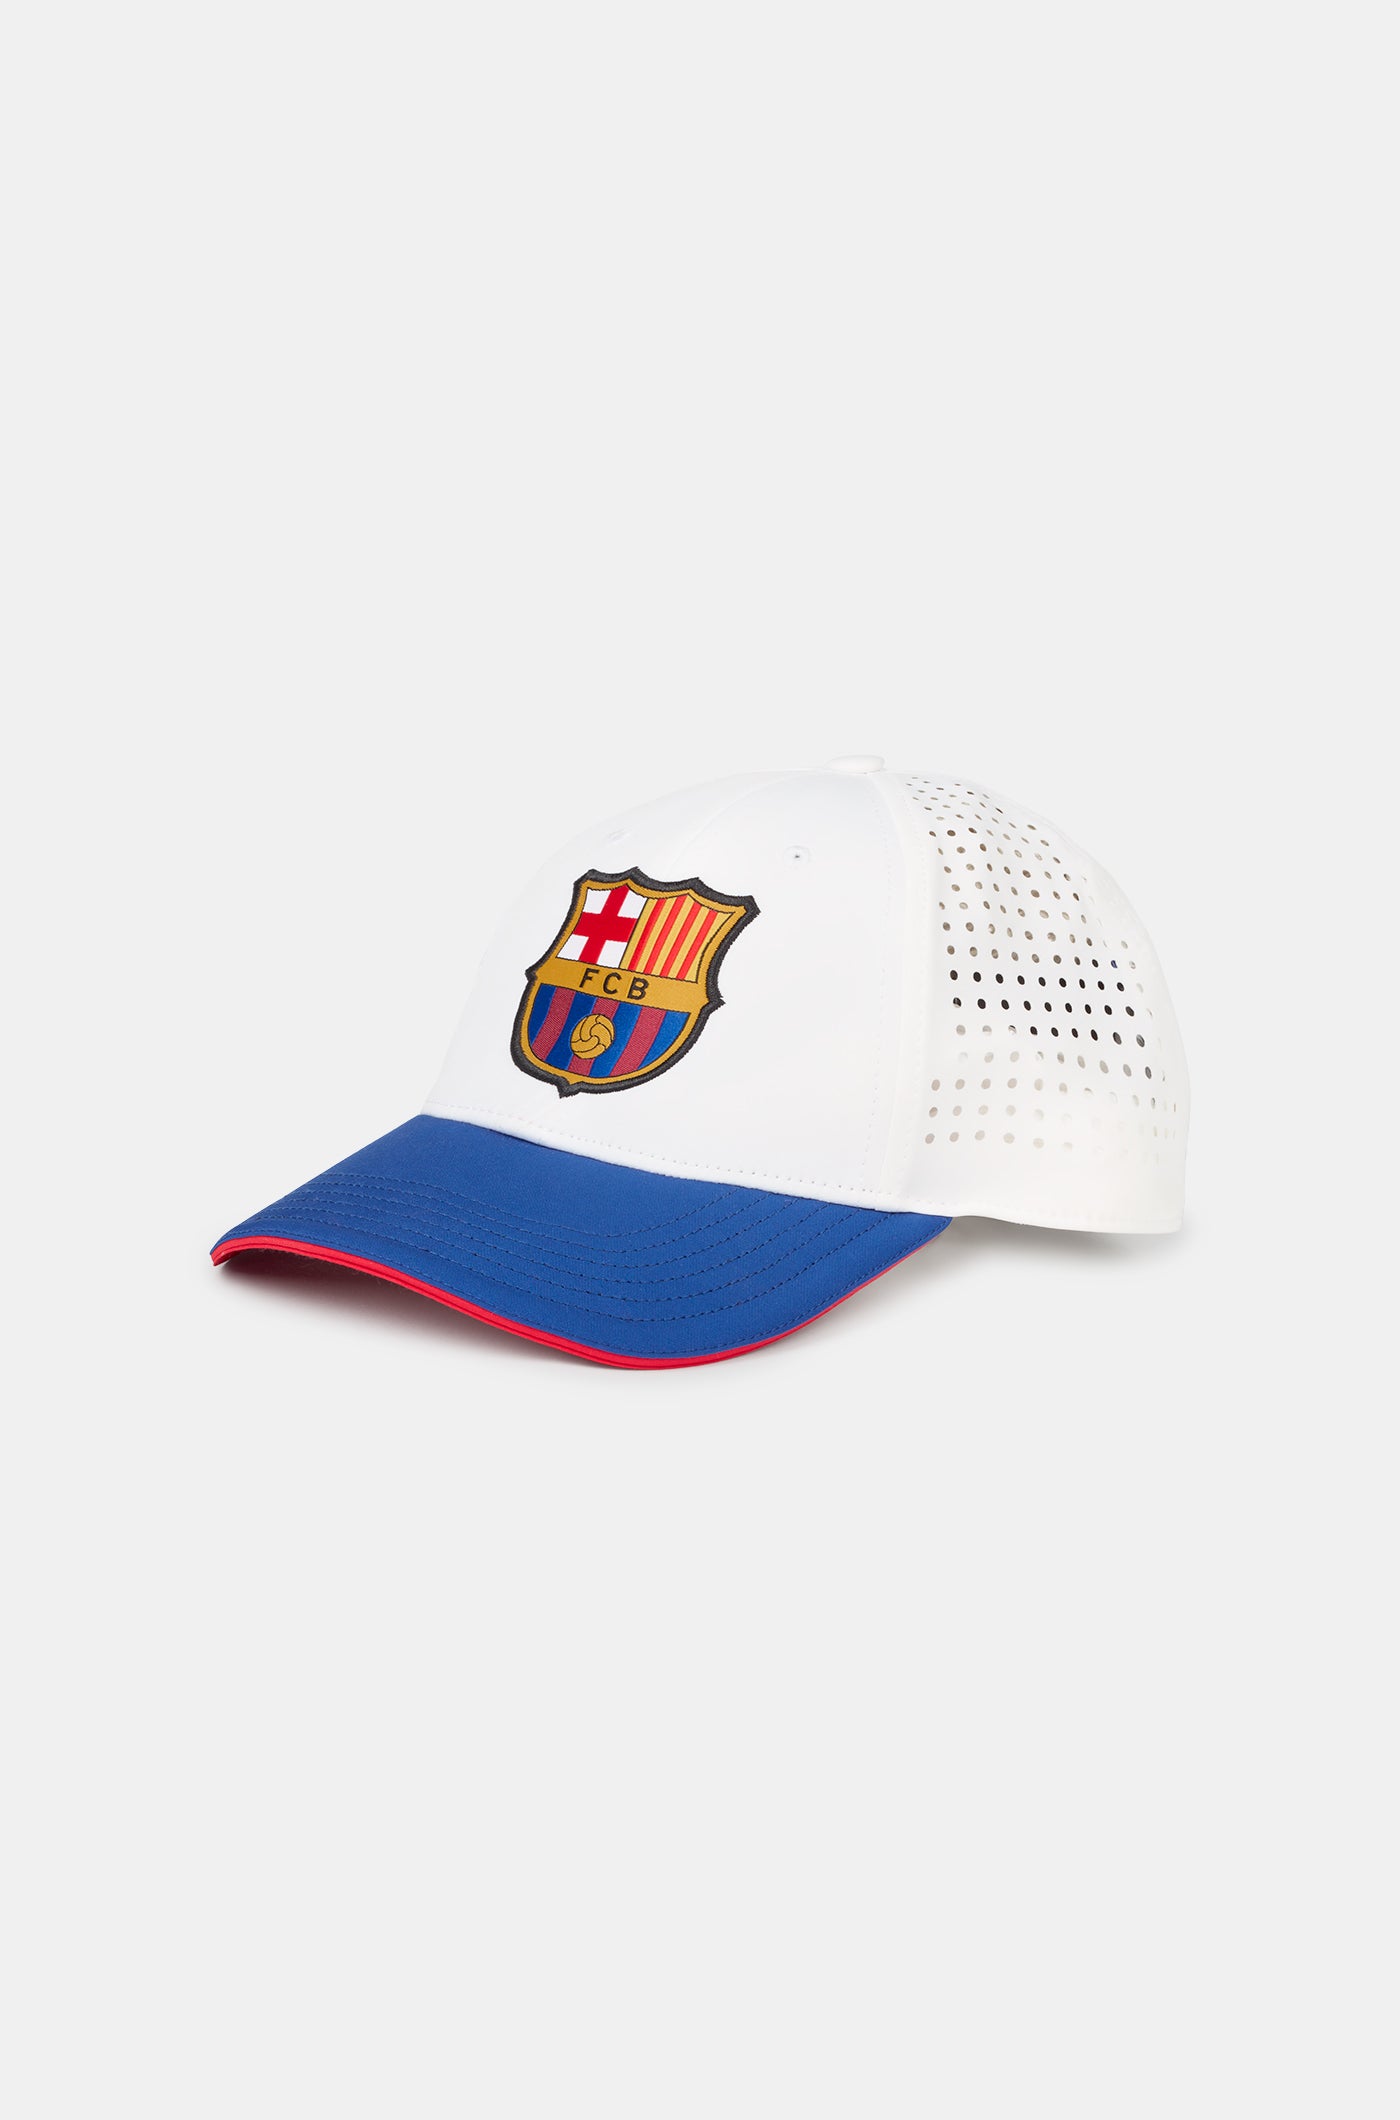 Camiseta blanca Barça Nike – Barça Official Store Spotify Camp Nou